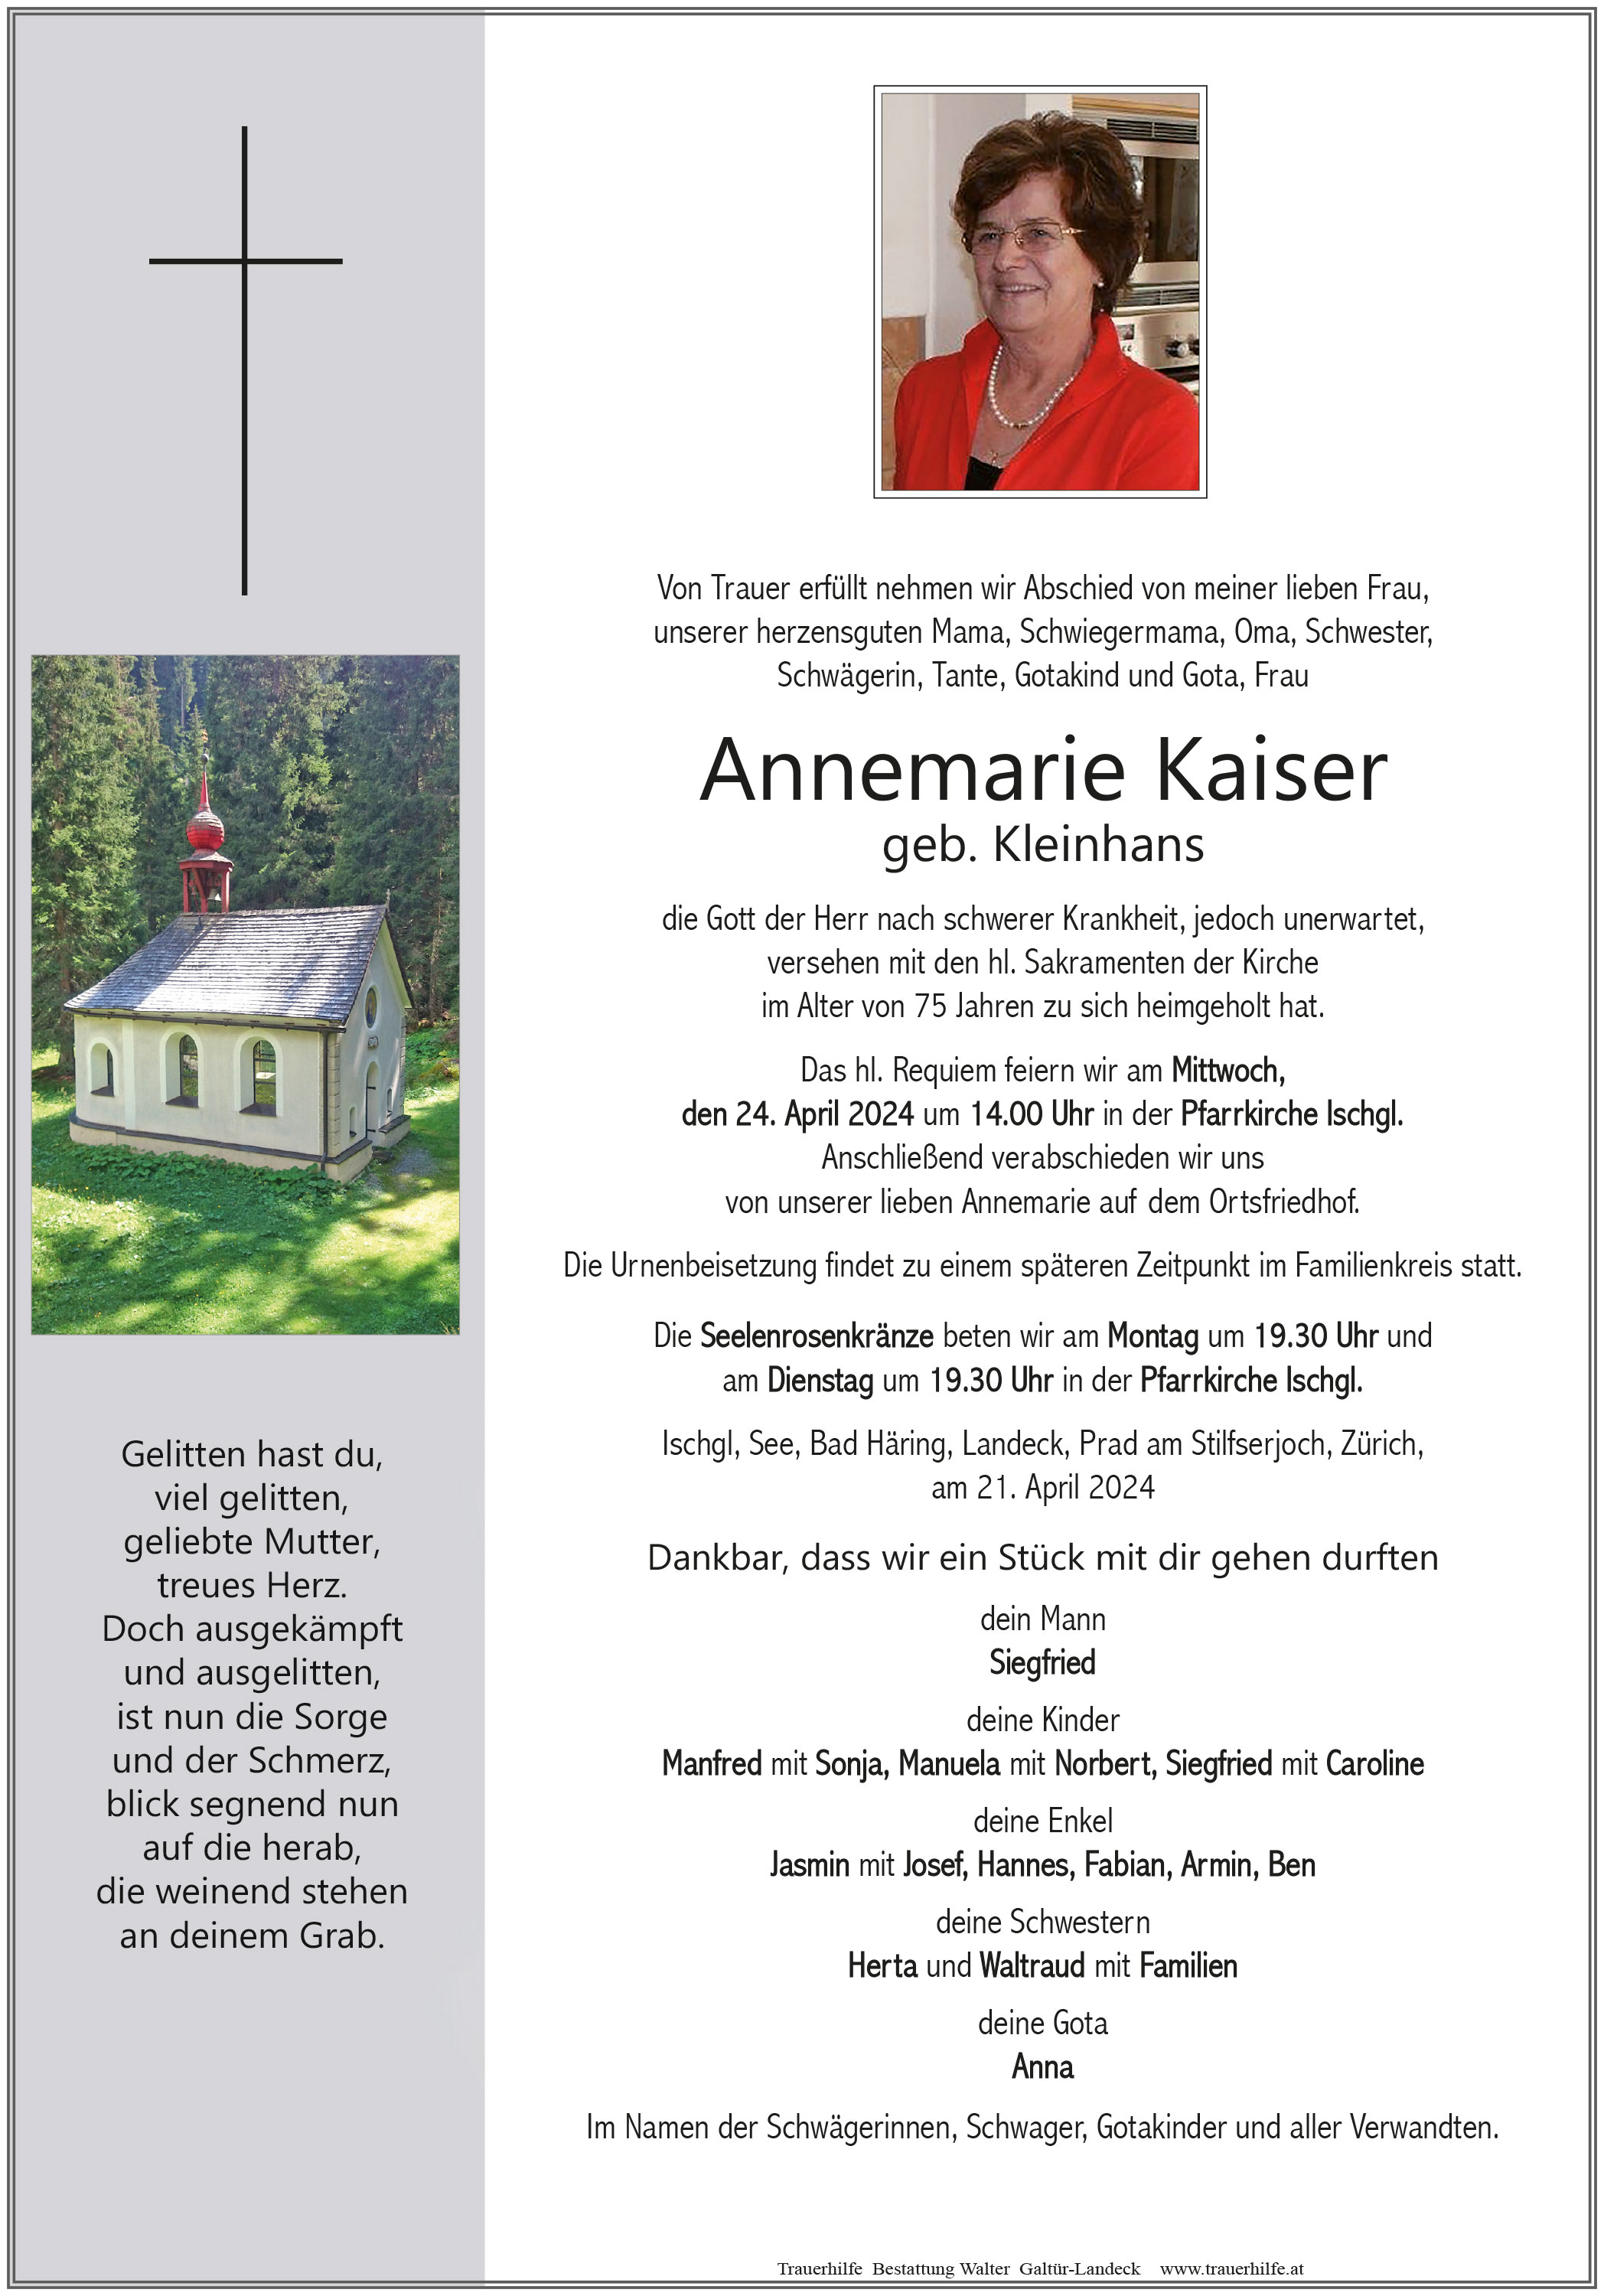 Annemarie Kaiser